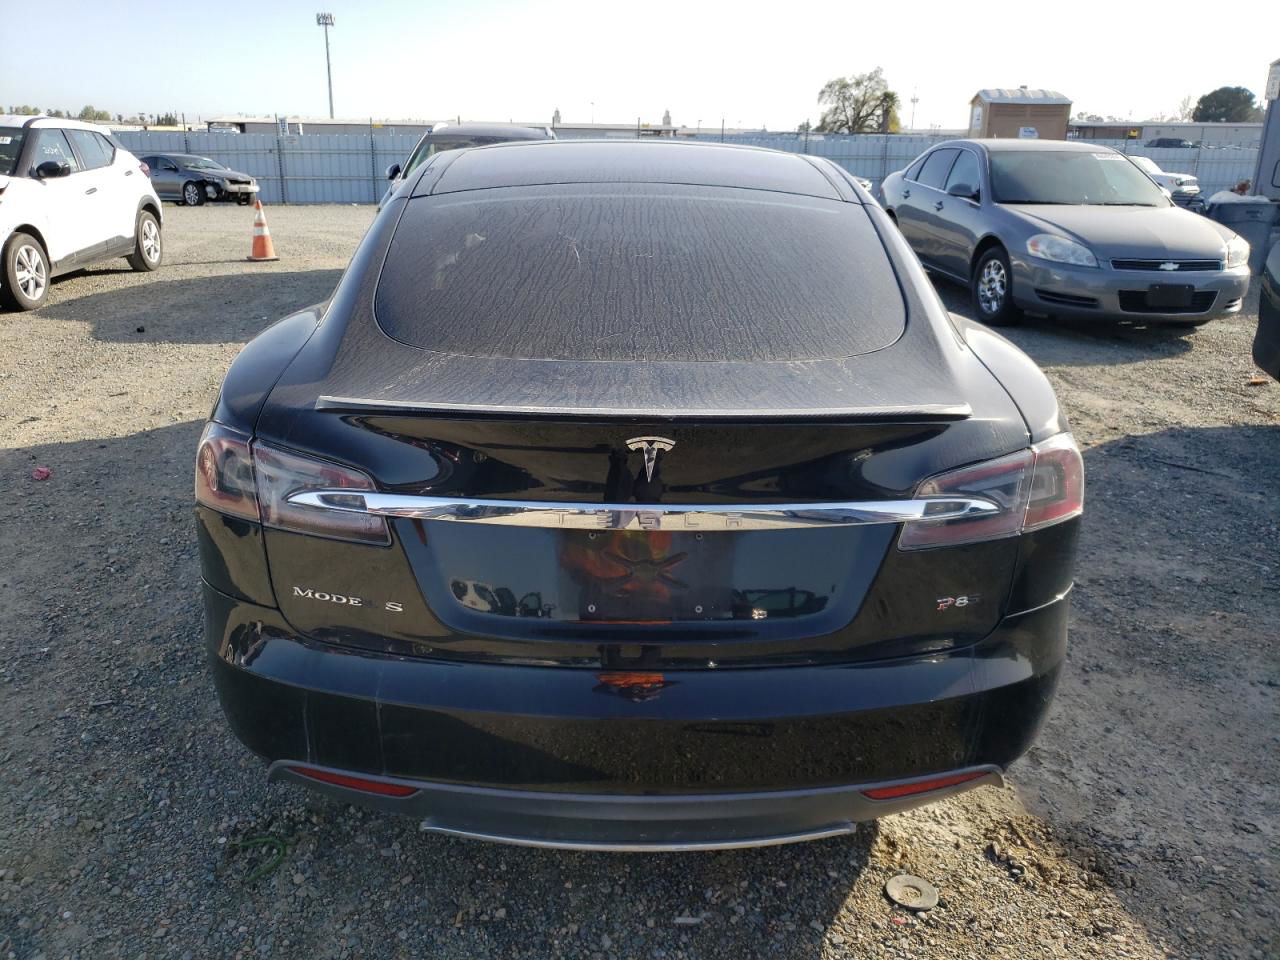 2013 Tesla Model S  Черный vin: 5YJSA1CP0DFP08048